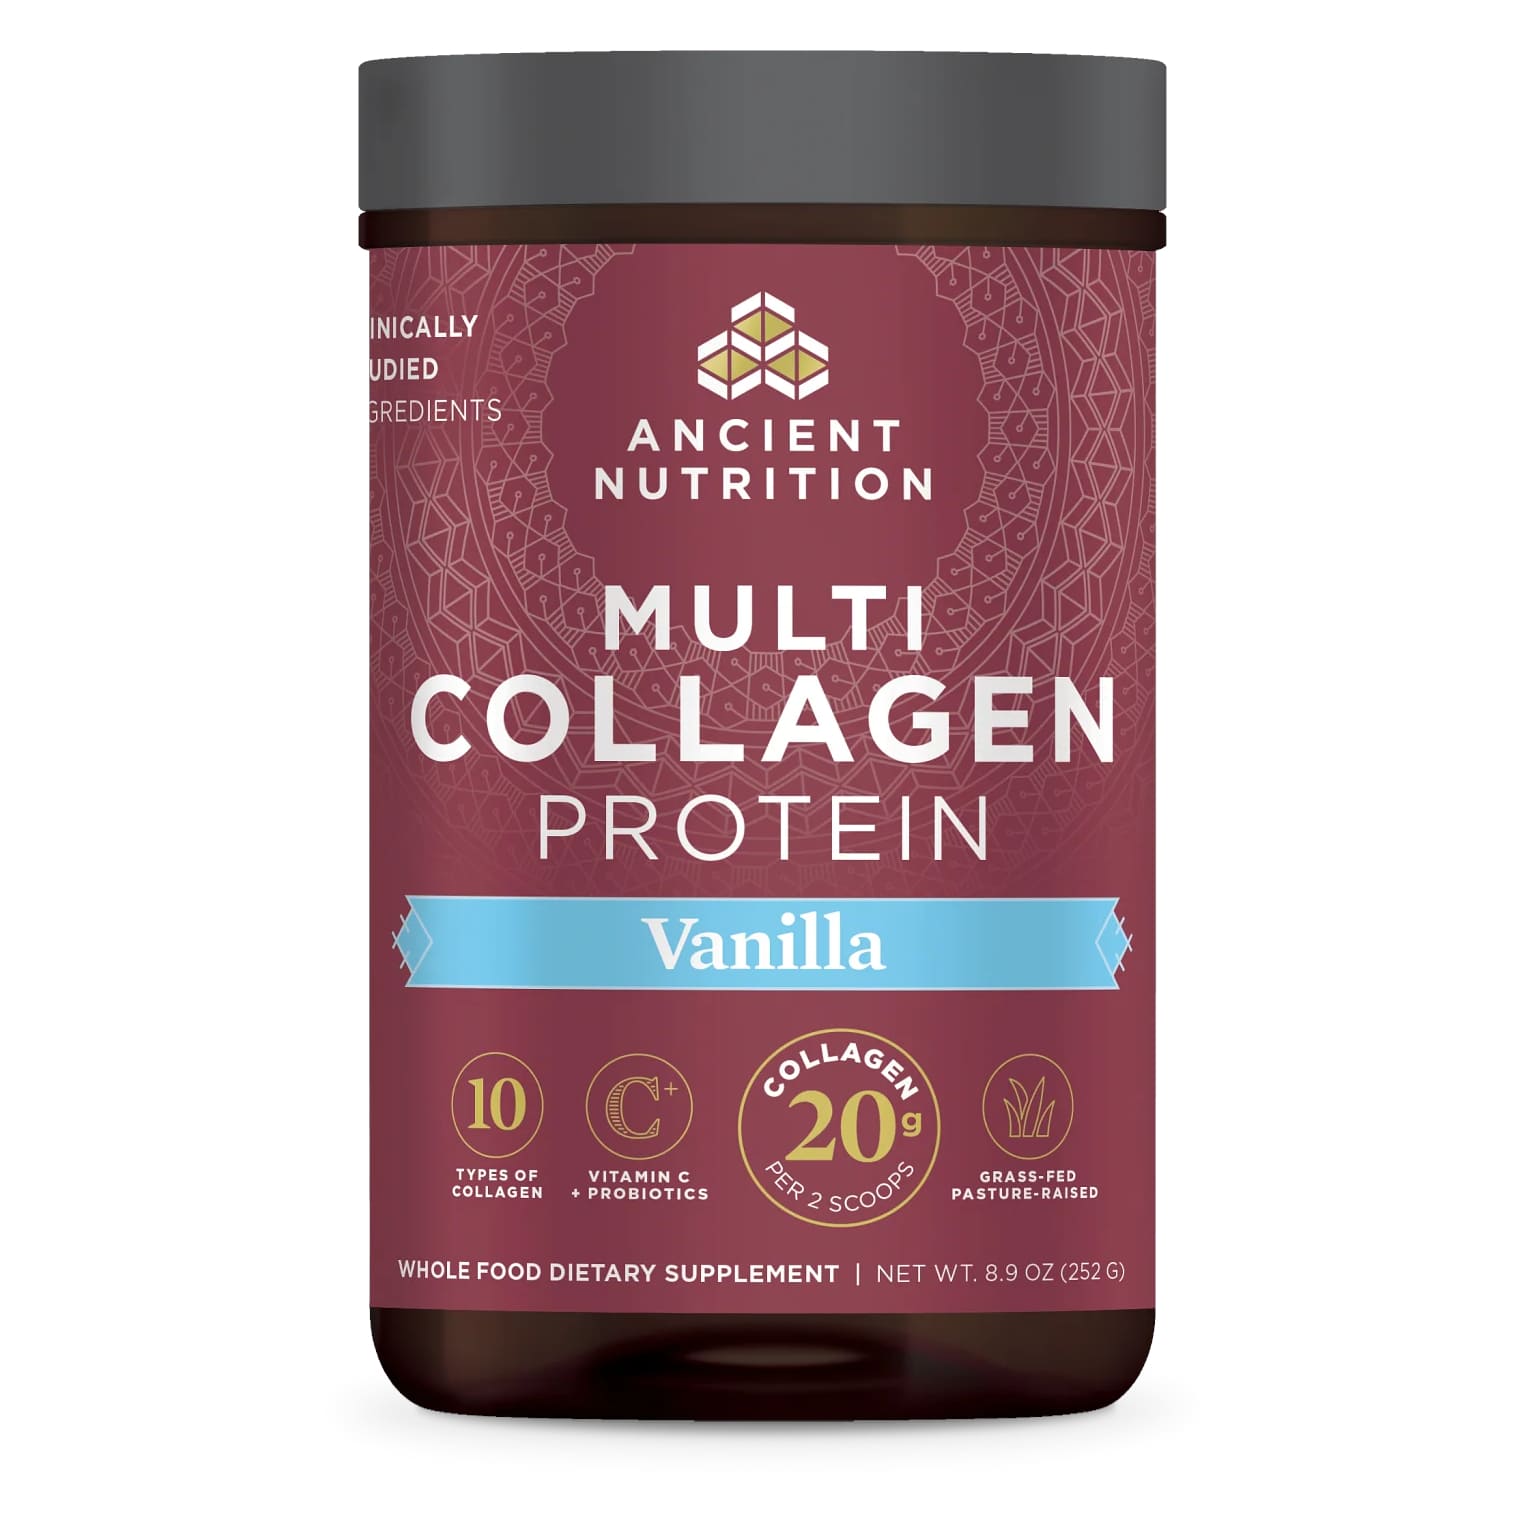 Коллаген Ancient Nutrition Multi Protein 10 Types Vitamin C + Probiotics Vanilla, 252 г коллаген ancient nutrition multi 10 types 90 капсул